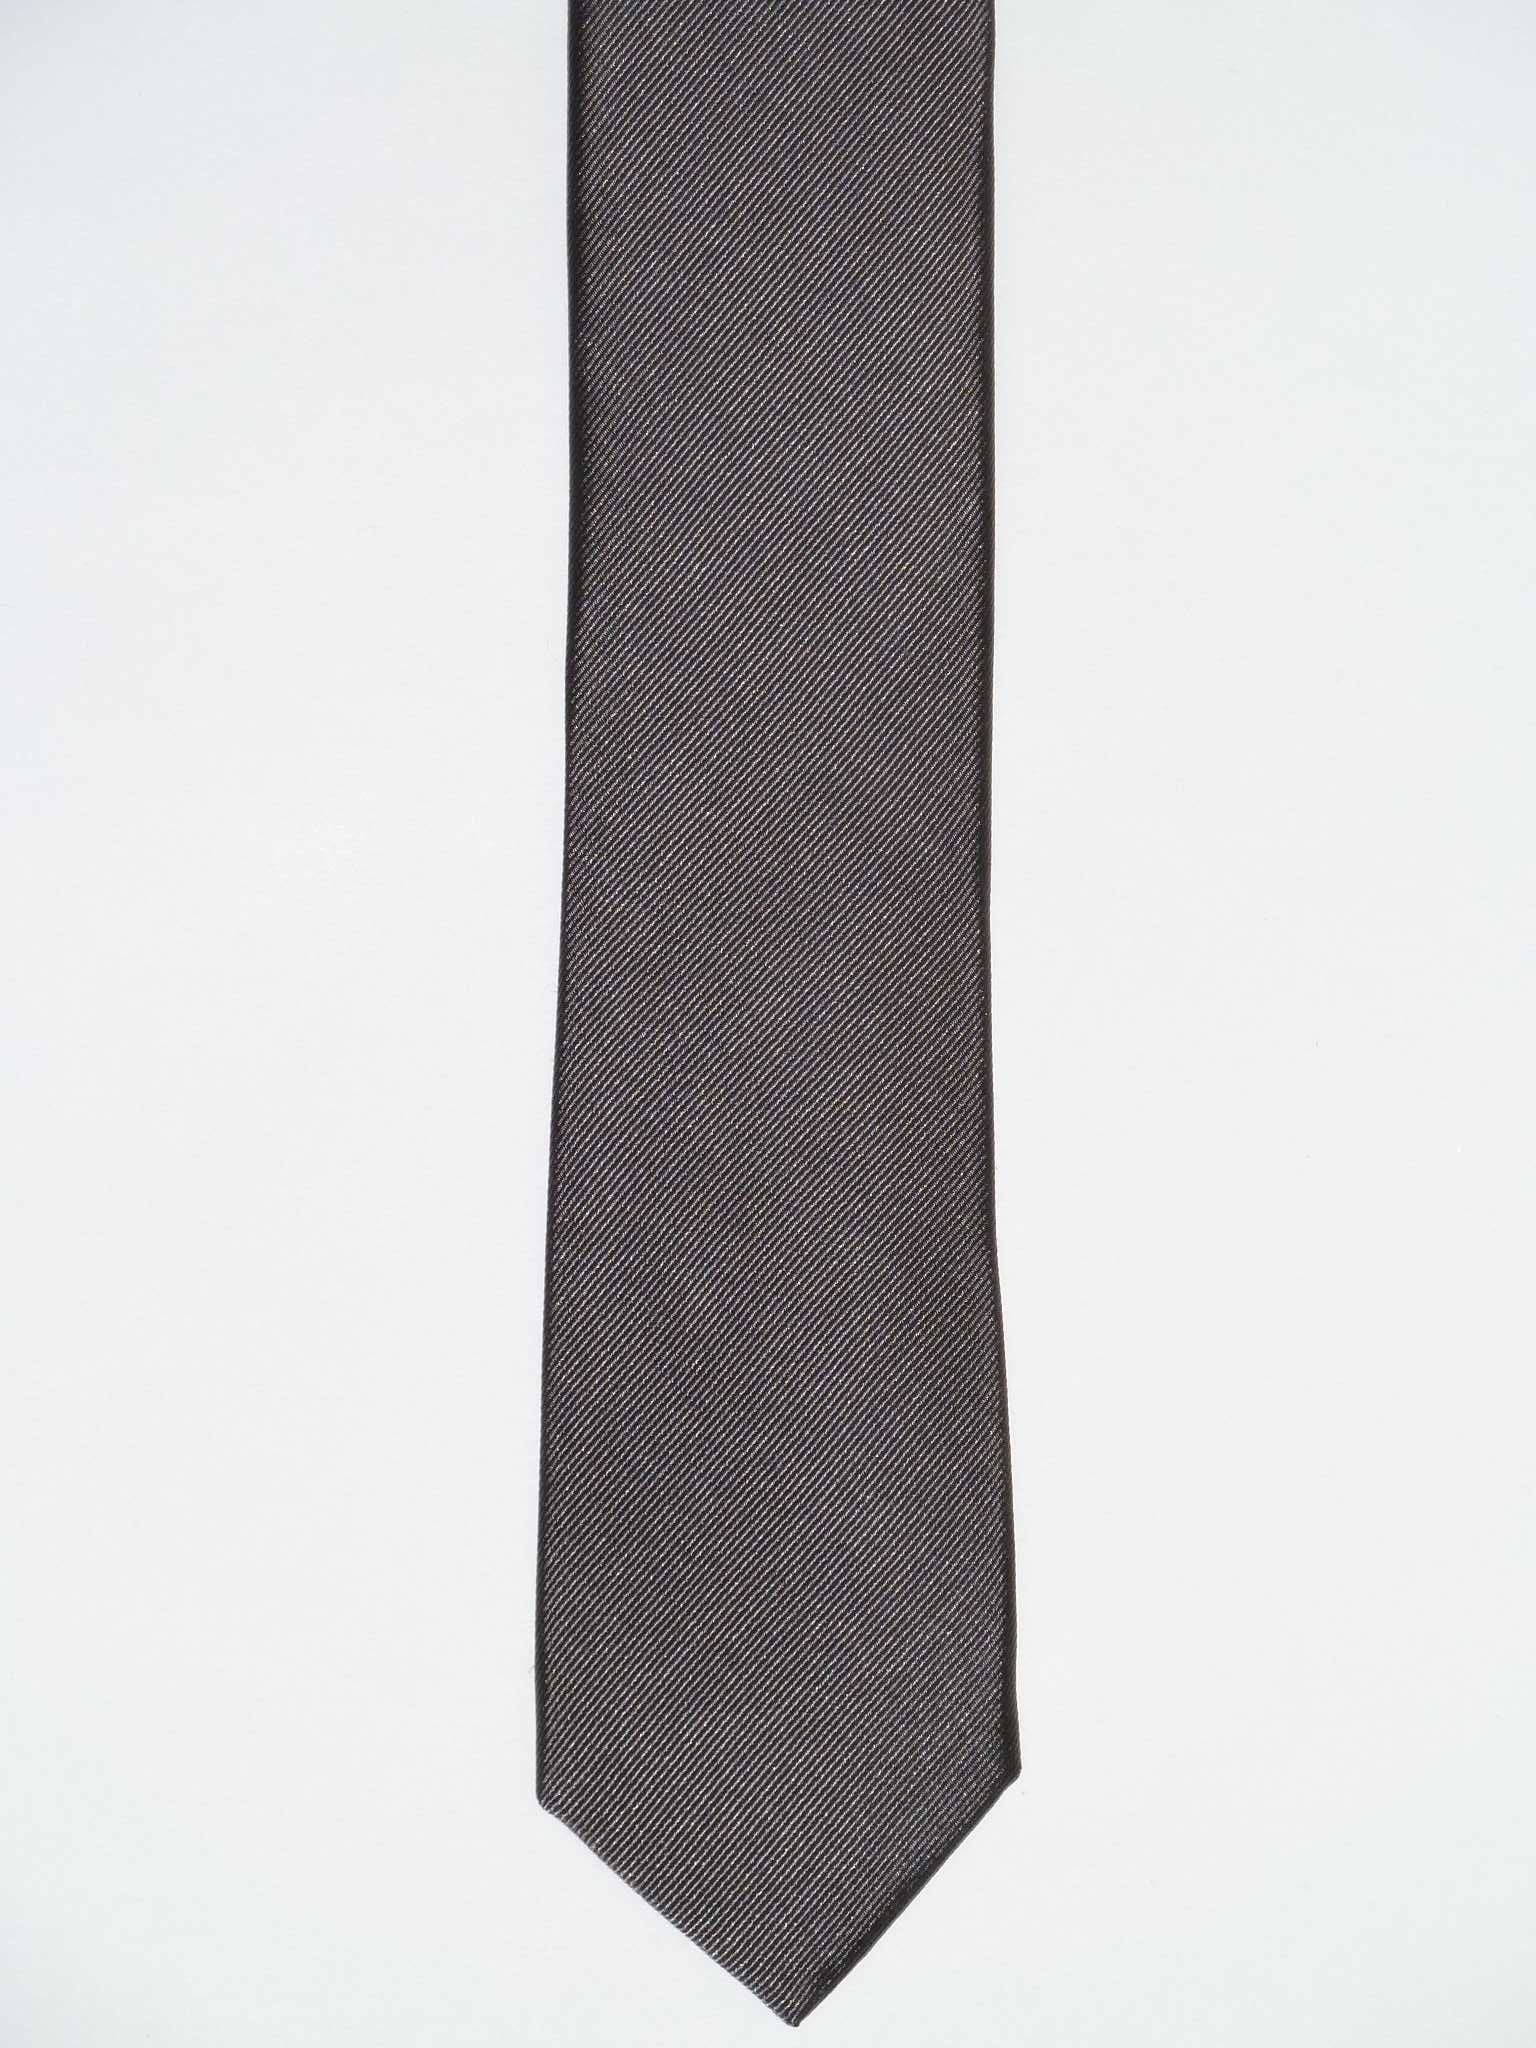 Grau Krawattenfabrik – MAICA Seide, 100% 6cm slim, Krawatte, Ripps,